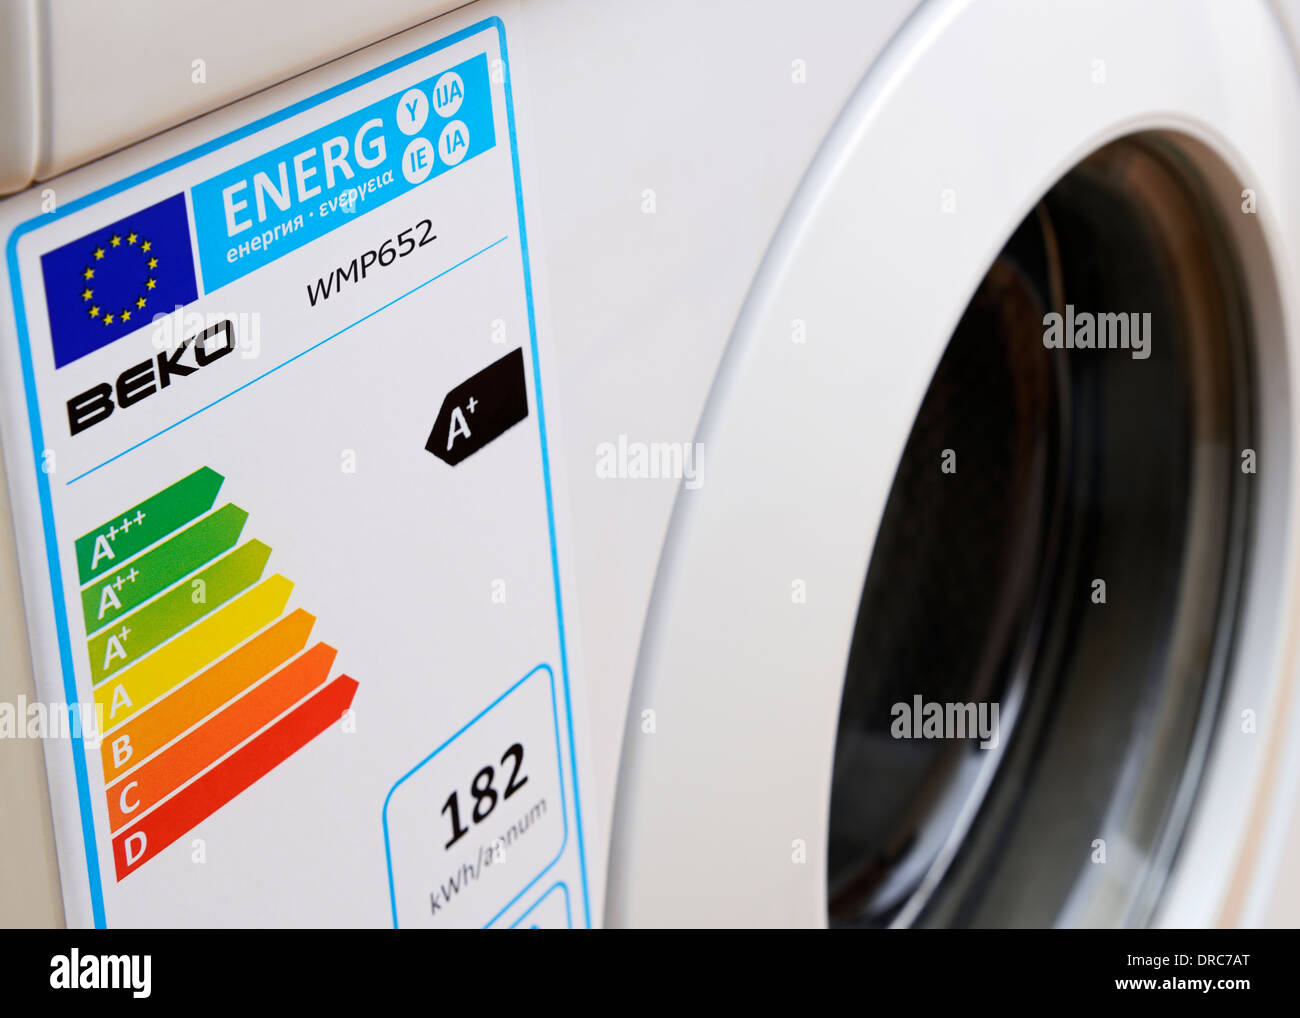 energy-rating-label-on-a-washing-machine-stock-photo-alamy